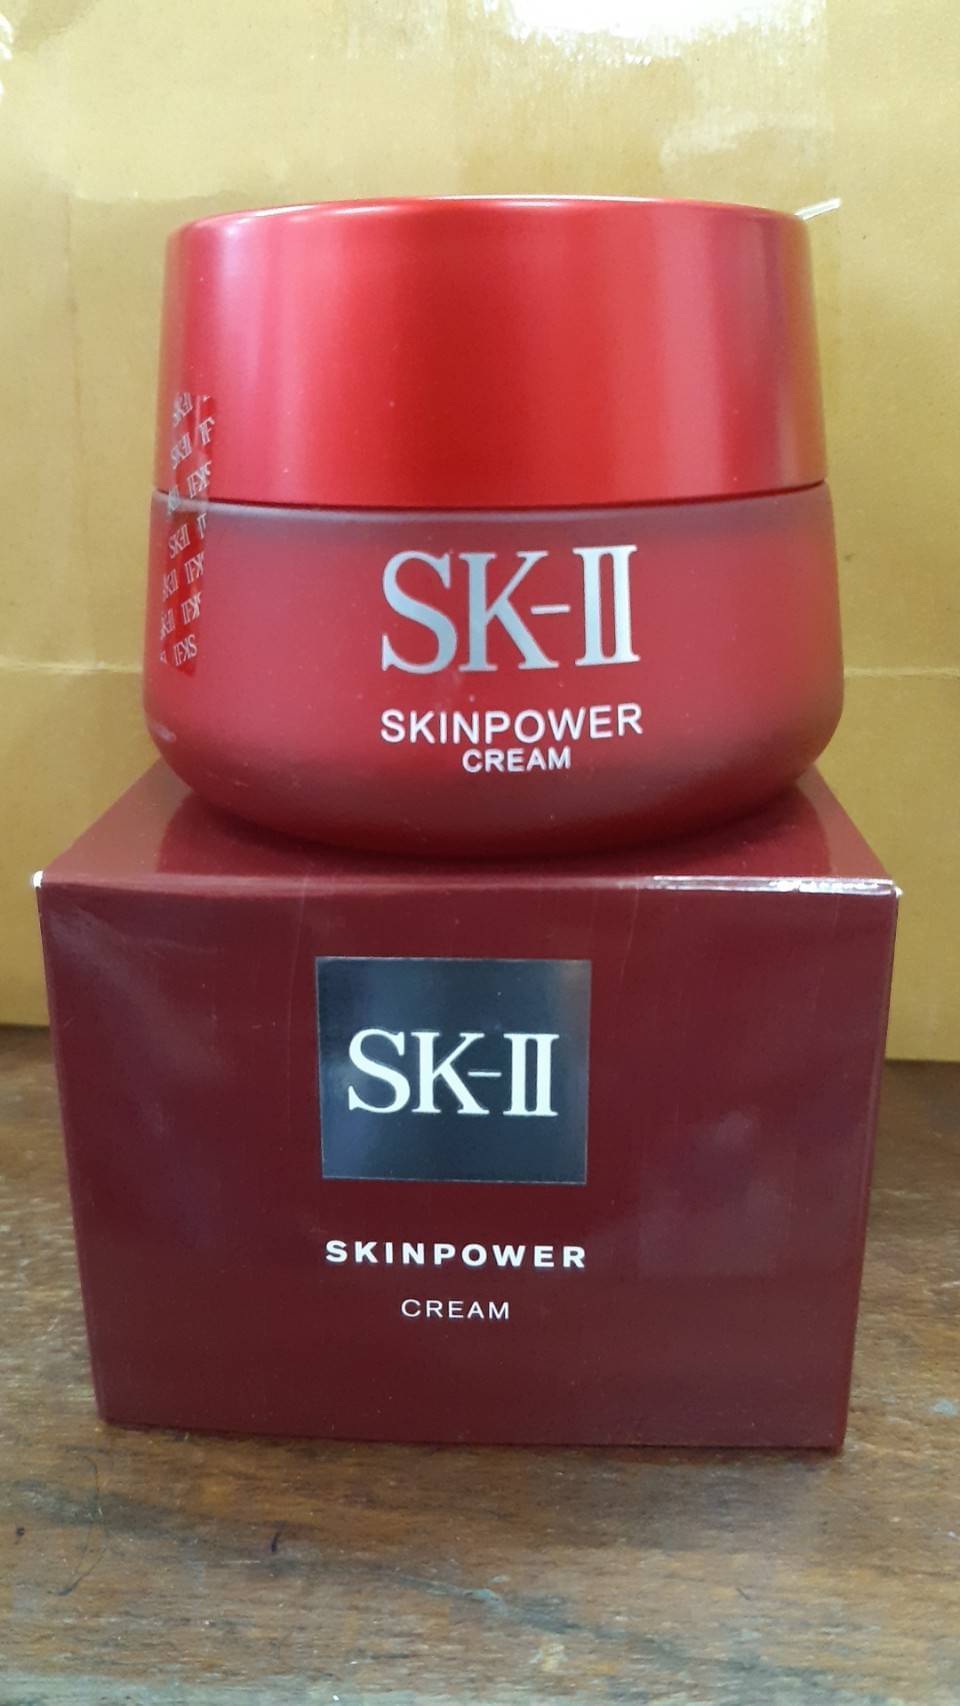 SK-II Skinpower Cream 80g รุ่นใหม่ล่าสุด พัฒนาจาก R.N.A.รูปโชว์ถ่ายจากสินค้าจริงที่จำหน่าย